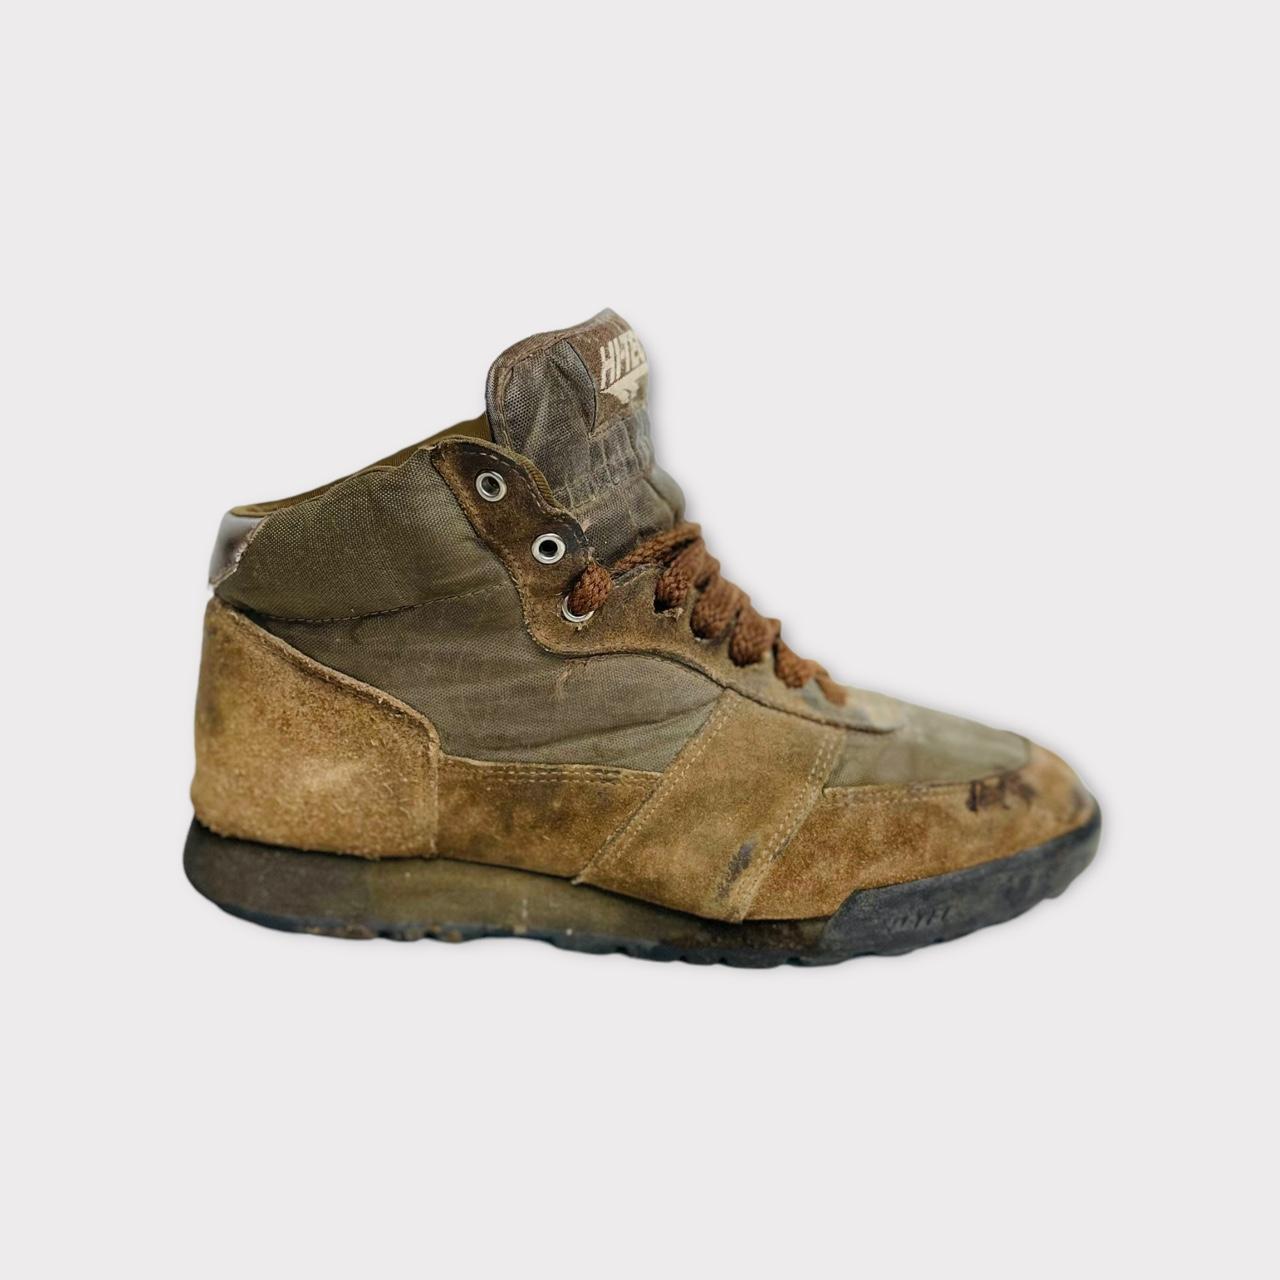 Product Image 1 - Vintage Hi-Tec Shasta Hiking Boots,